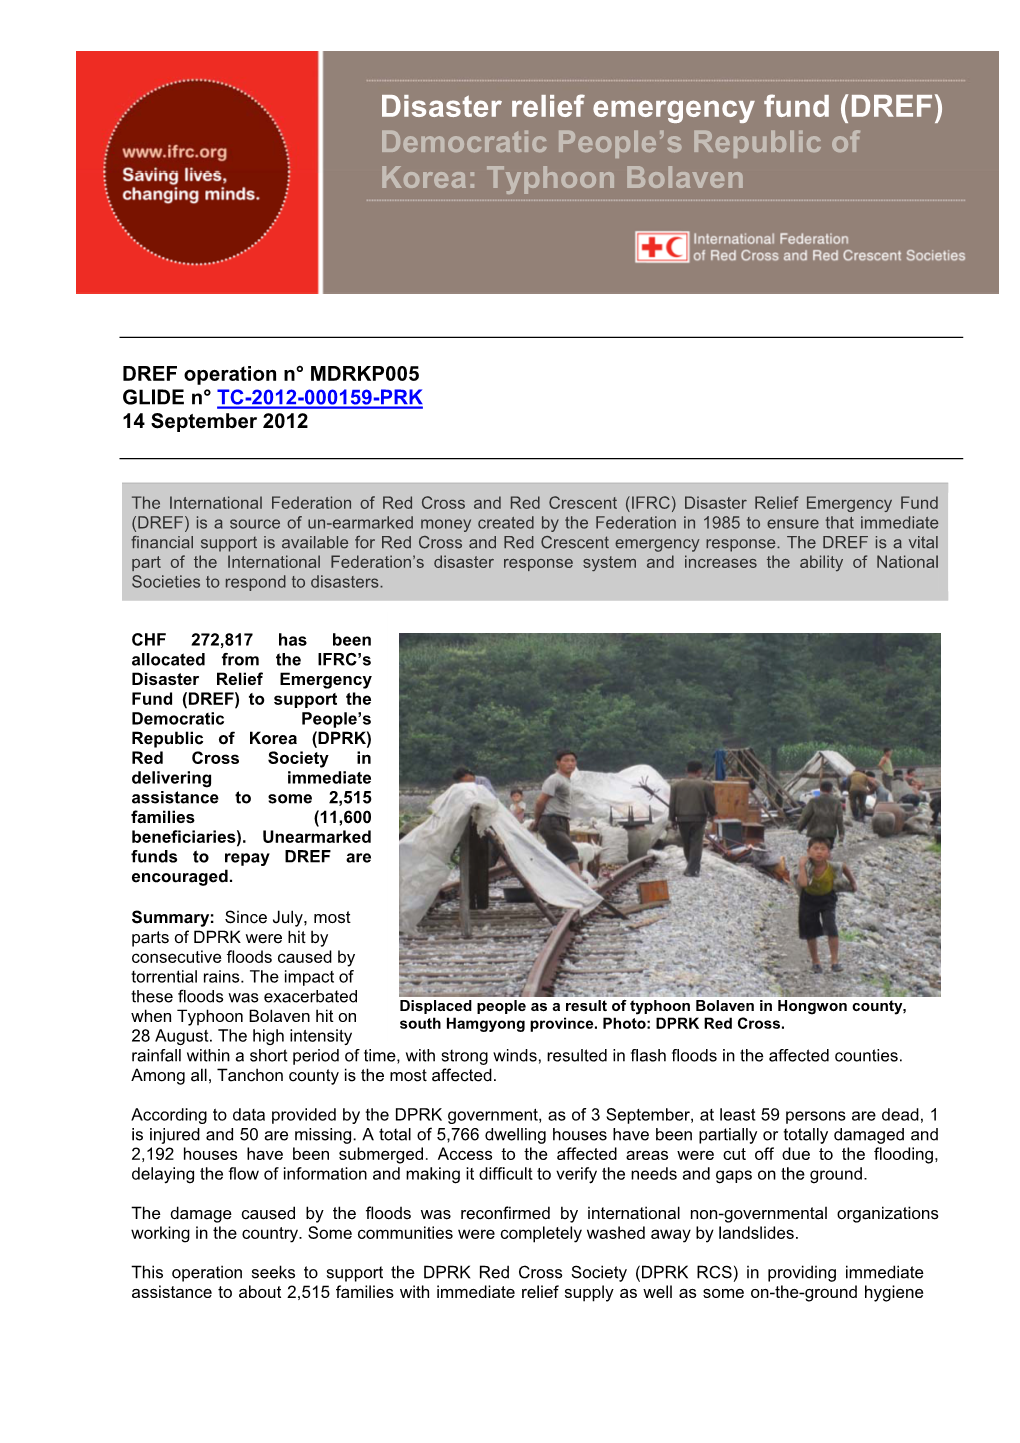 Disaster Relief Emergency Fund (DREF) Democratic People’S Republic of Korea: Typhoon Bolaven